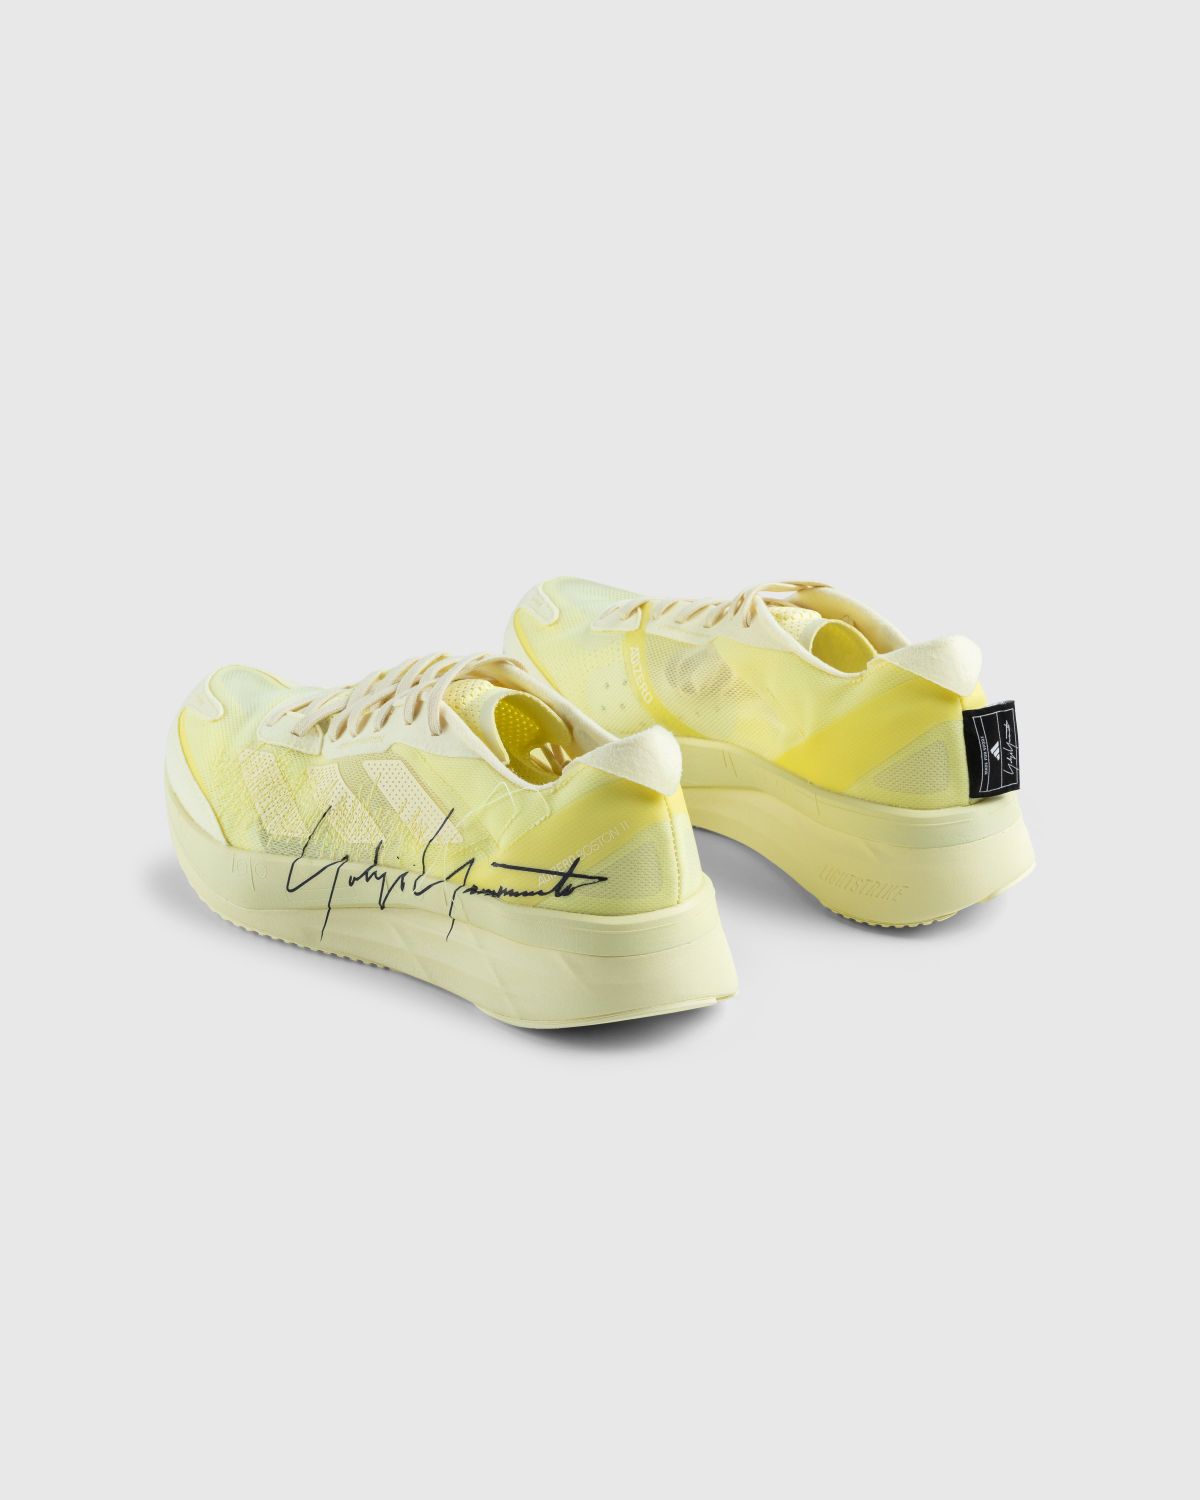 Y-3 – Boston 11 Blush Yellow/Black - Sneakers - Multi - Image 4